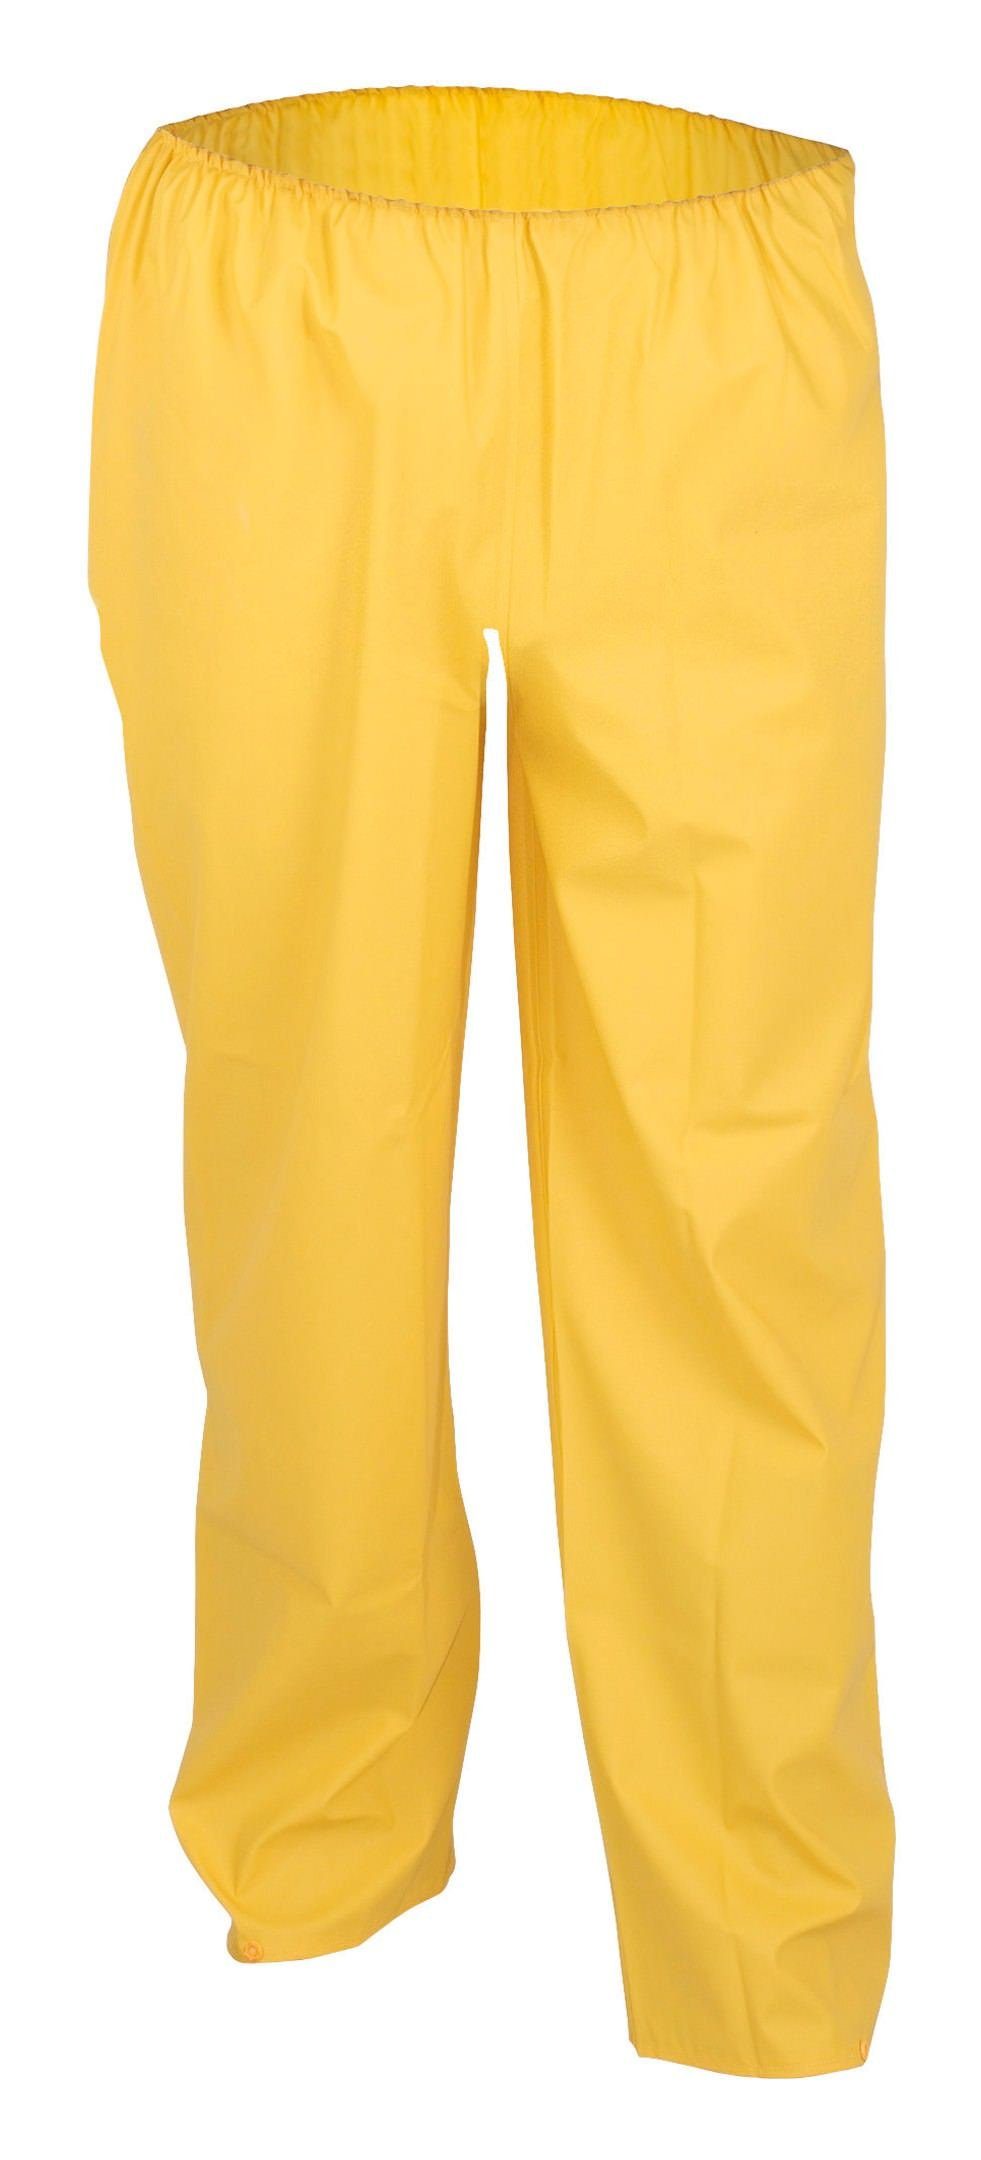 ASATEX Regenhose Bundhose PU-Stretch Größe 4 / 62-64 gelb